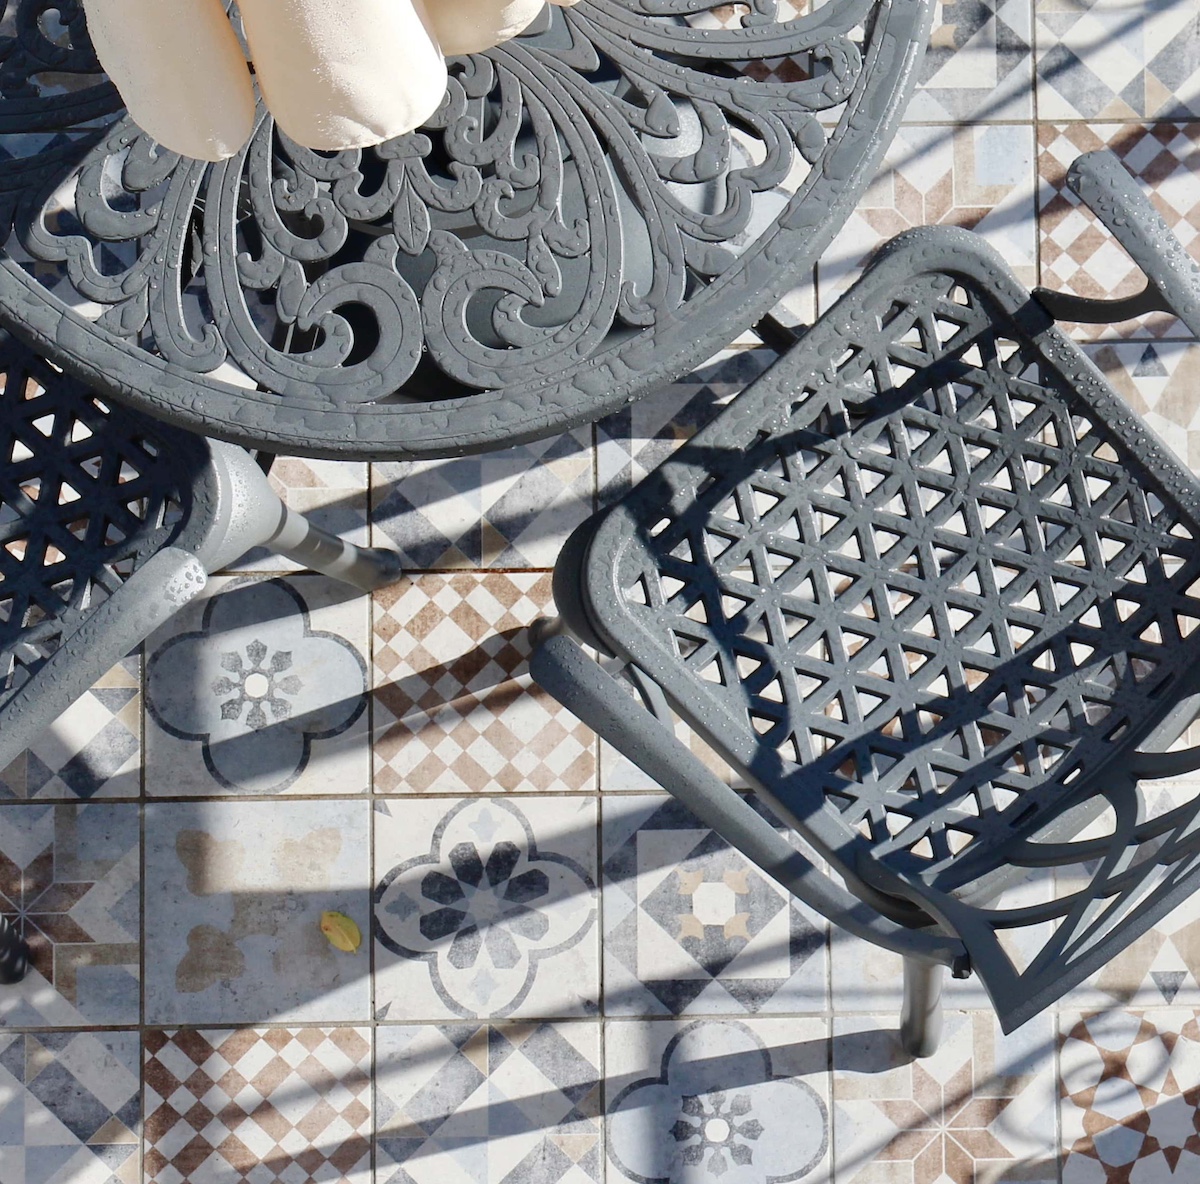 Get your cast aluminium garden furniture ready in 10-steps | 9. Arrange